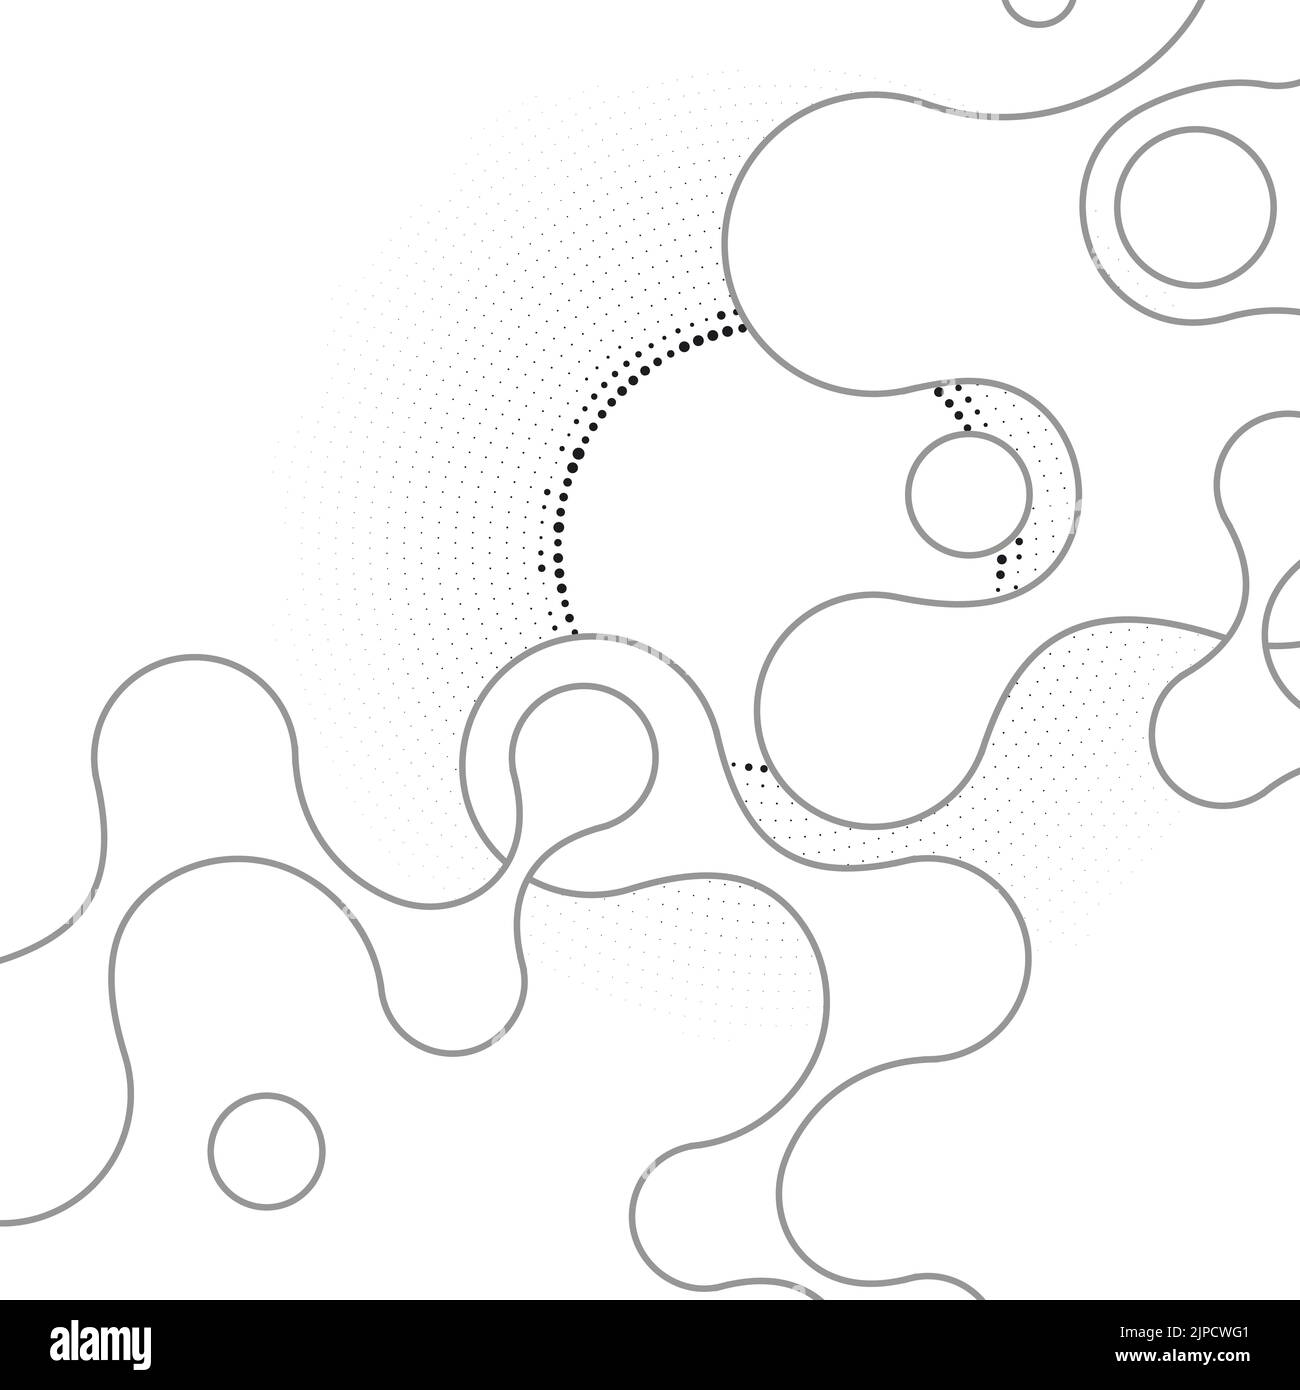 Banner abstracto moderno con estructura molecular sobre fondo blanco. Ilustración moderna de vectores Ilustración del Vector